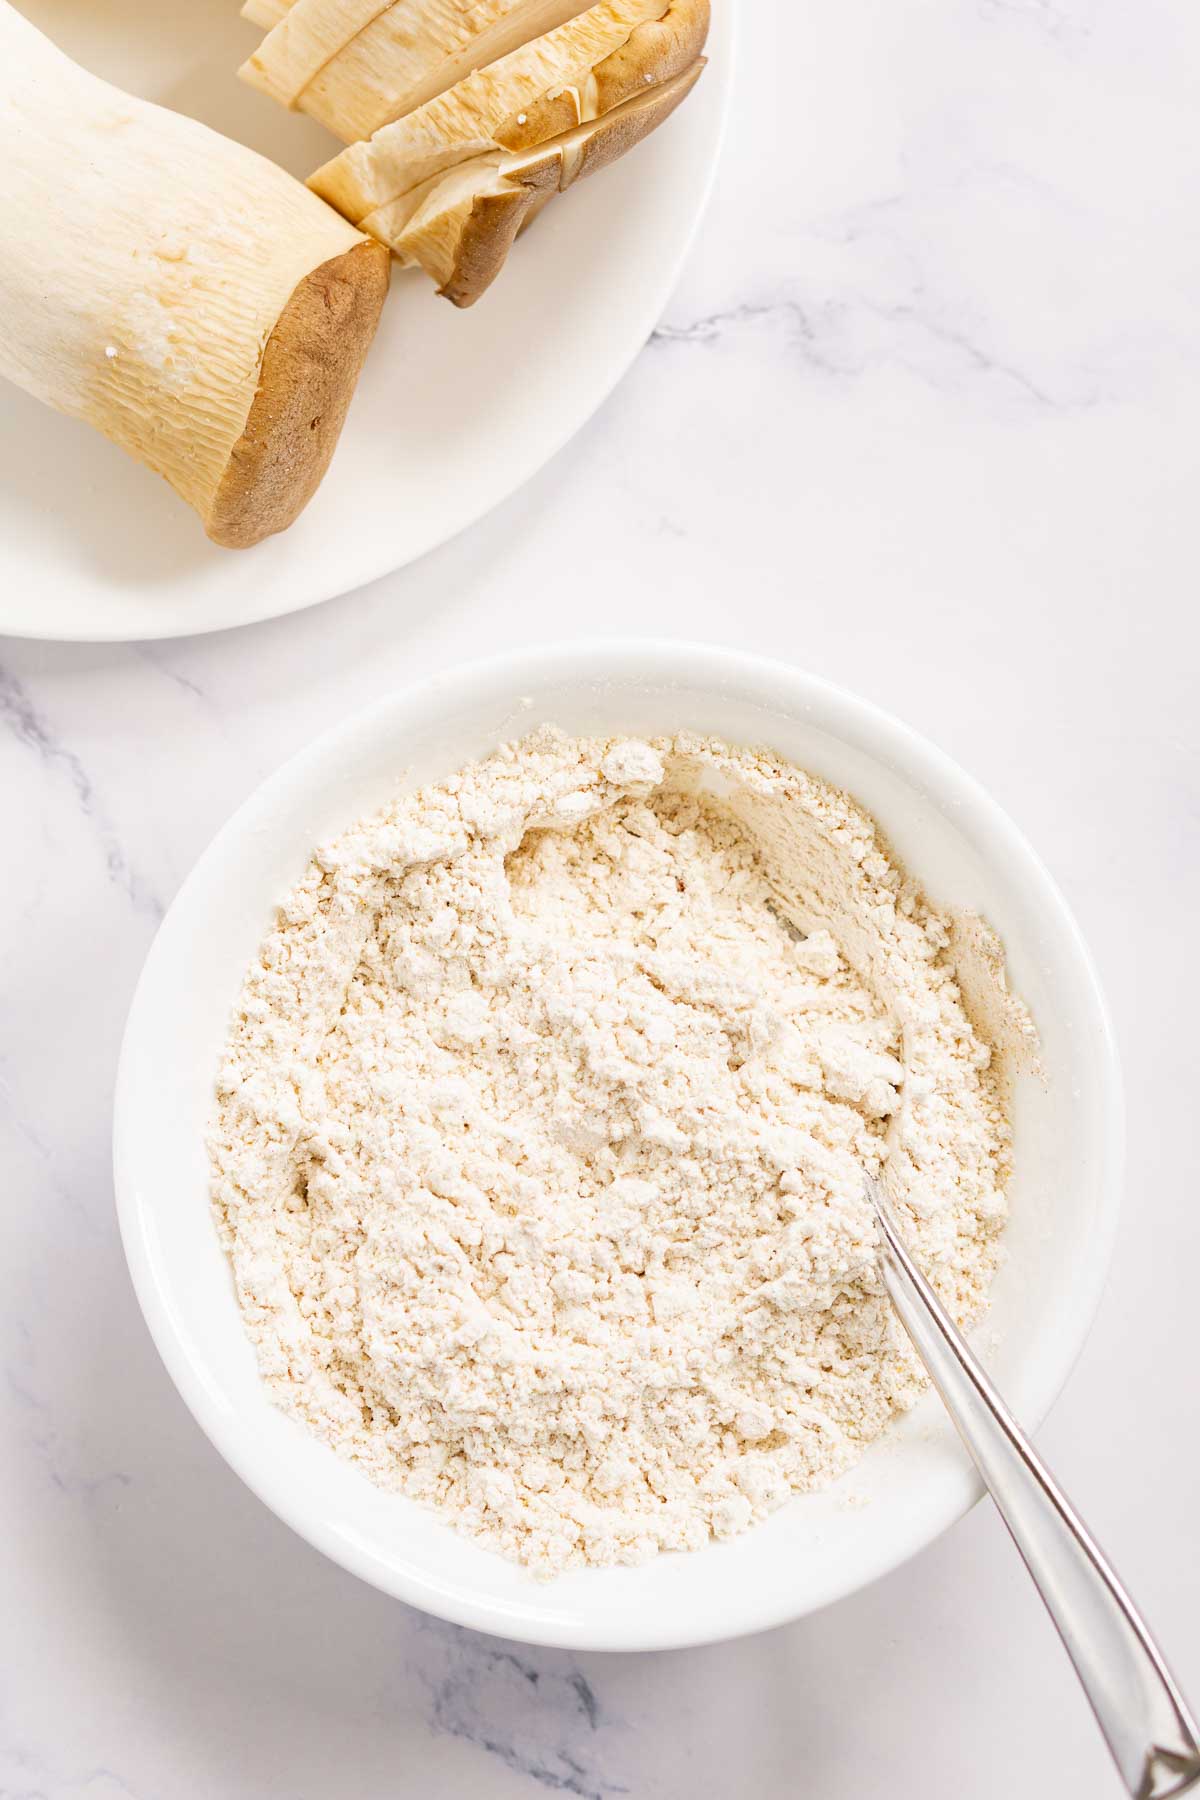 Seasoned flour mixture in a bowl